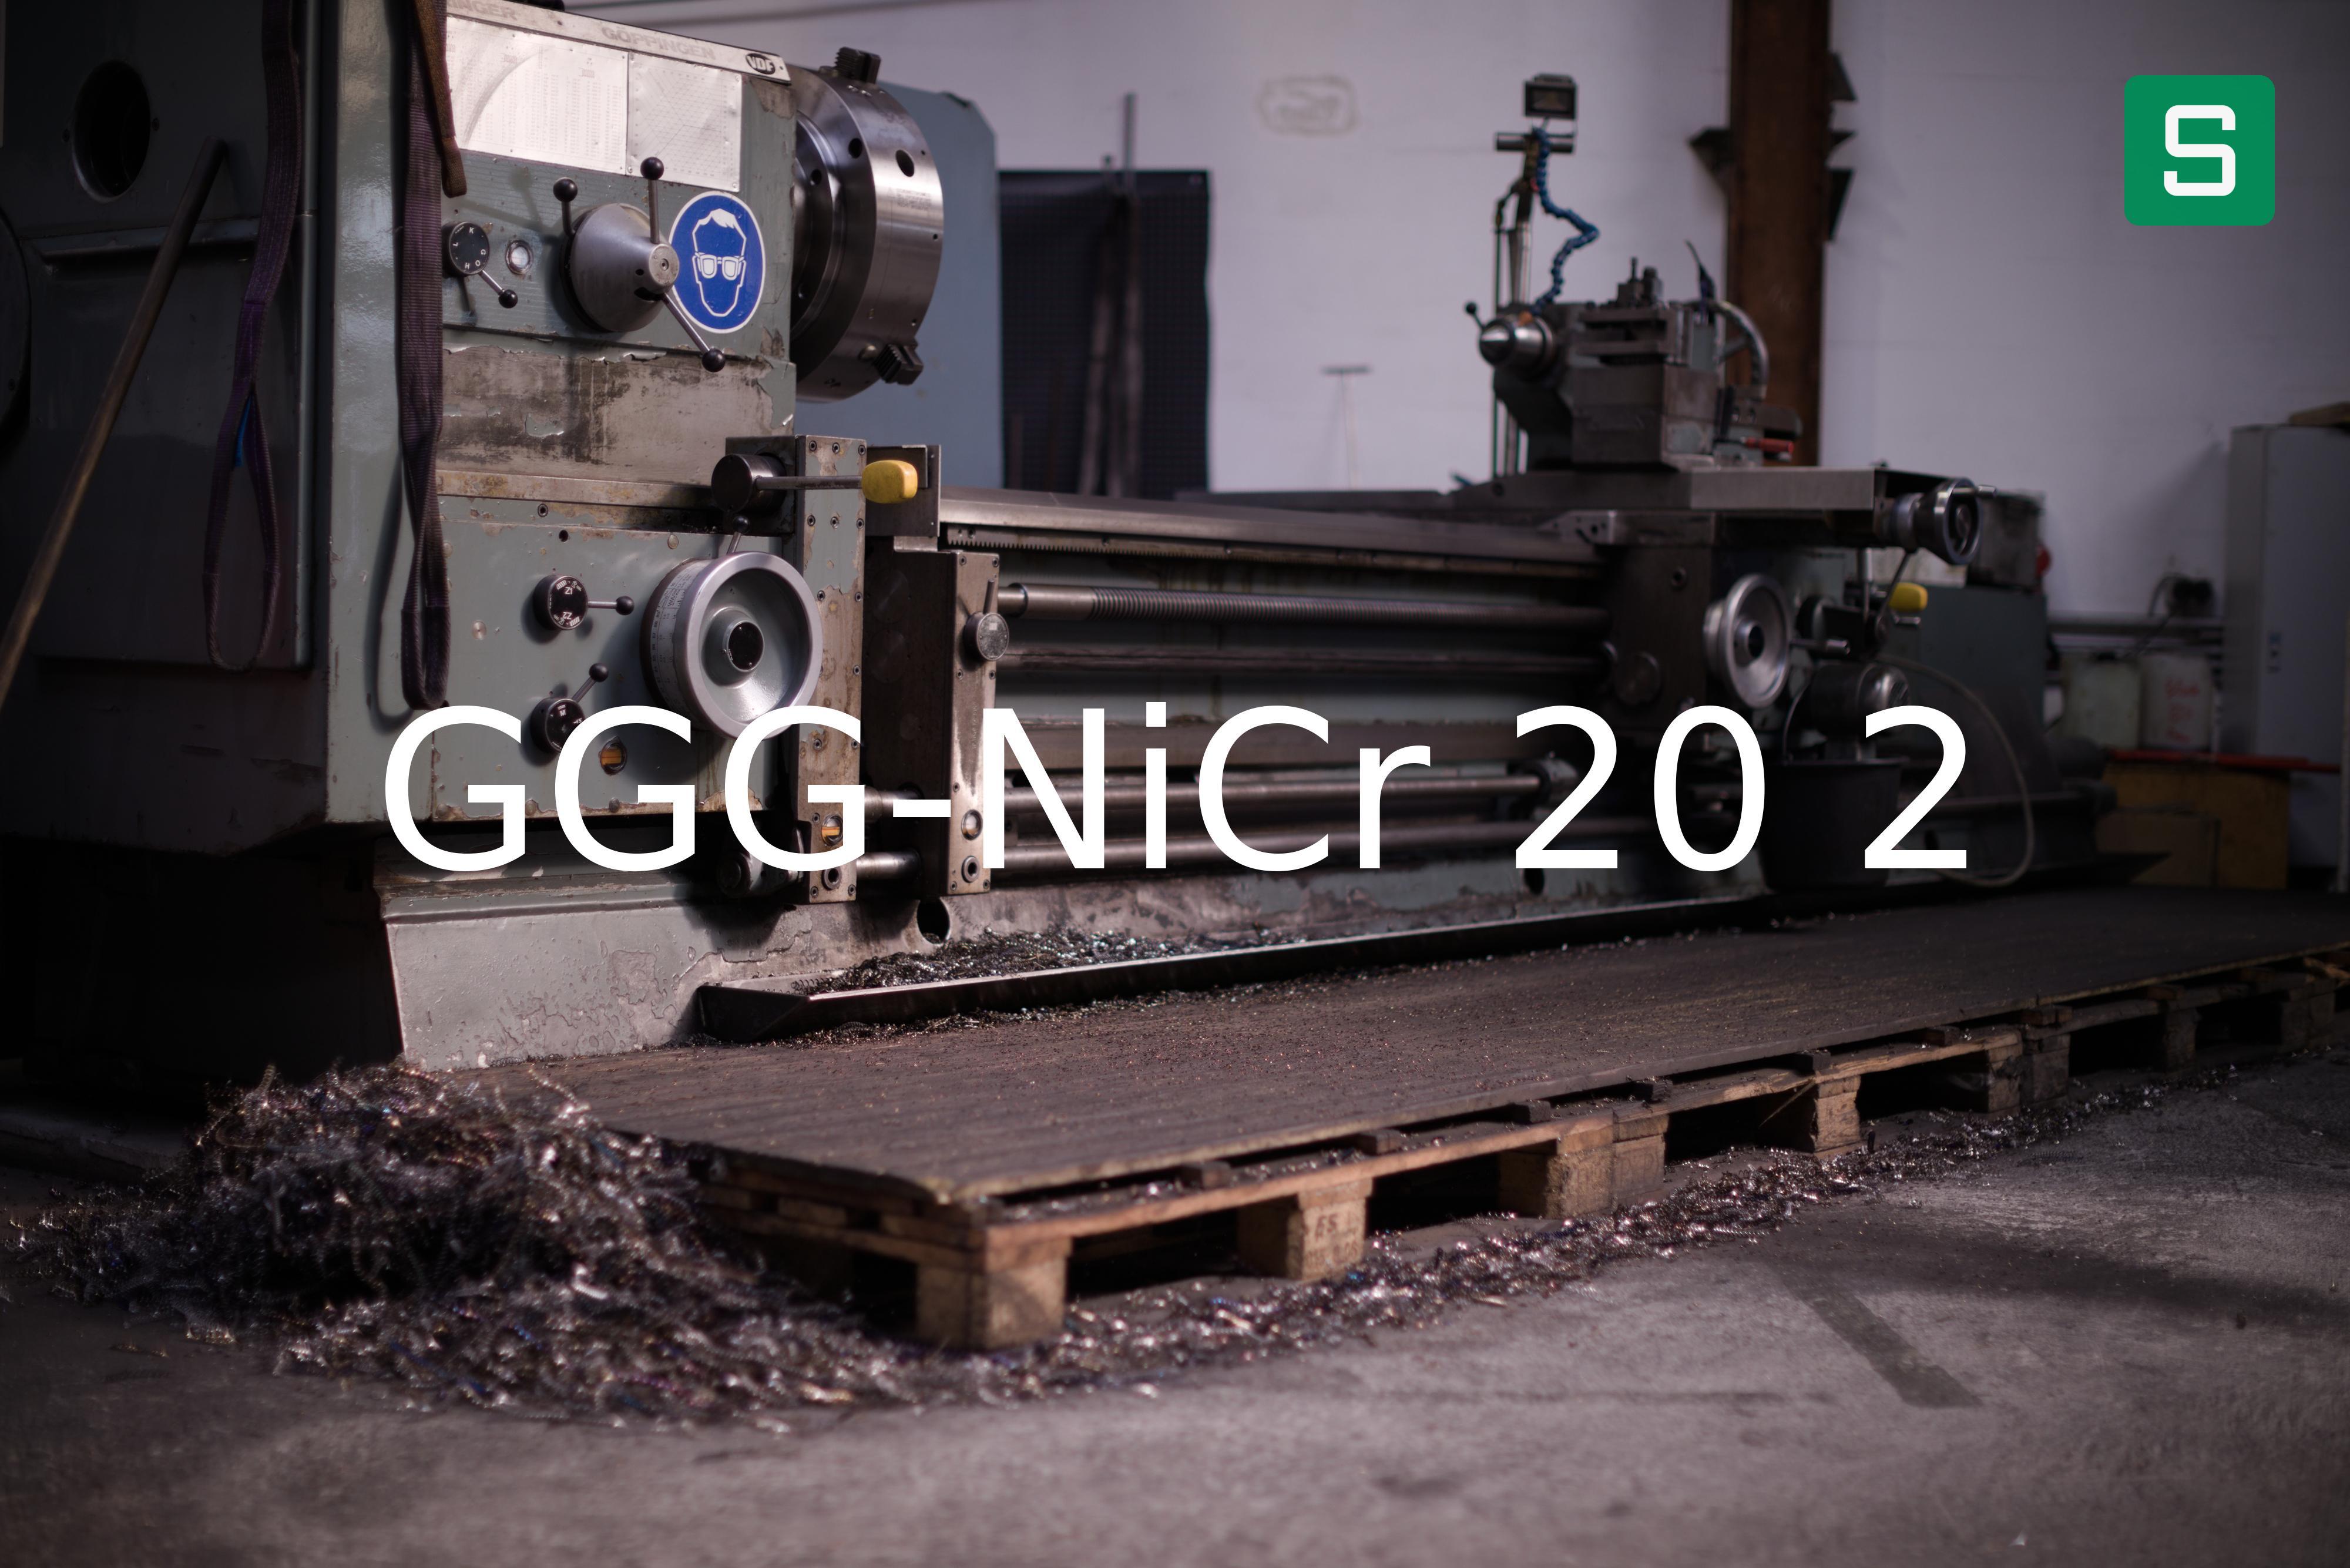 Steel Material: GGG-NiCr 20 2